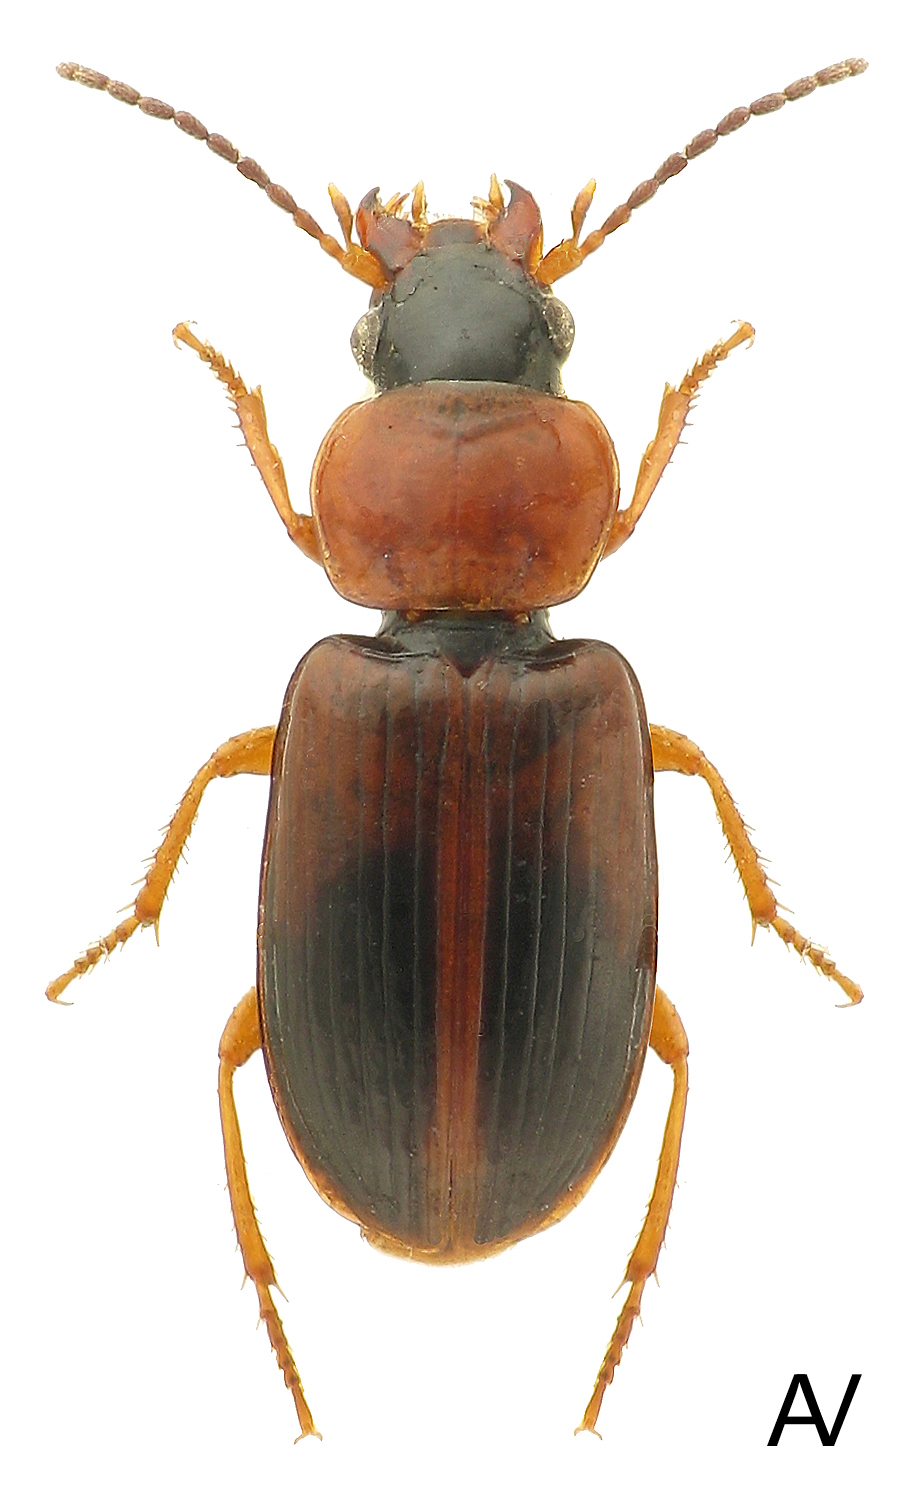 Subgenus Acupalpus sensu stricto - Carabidae